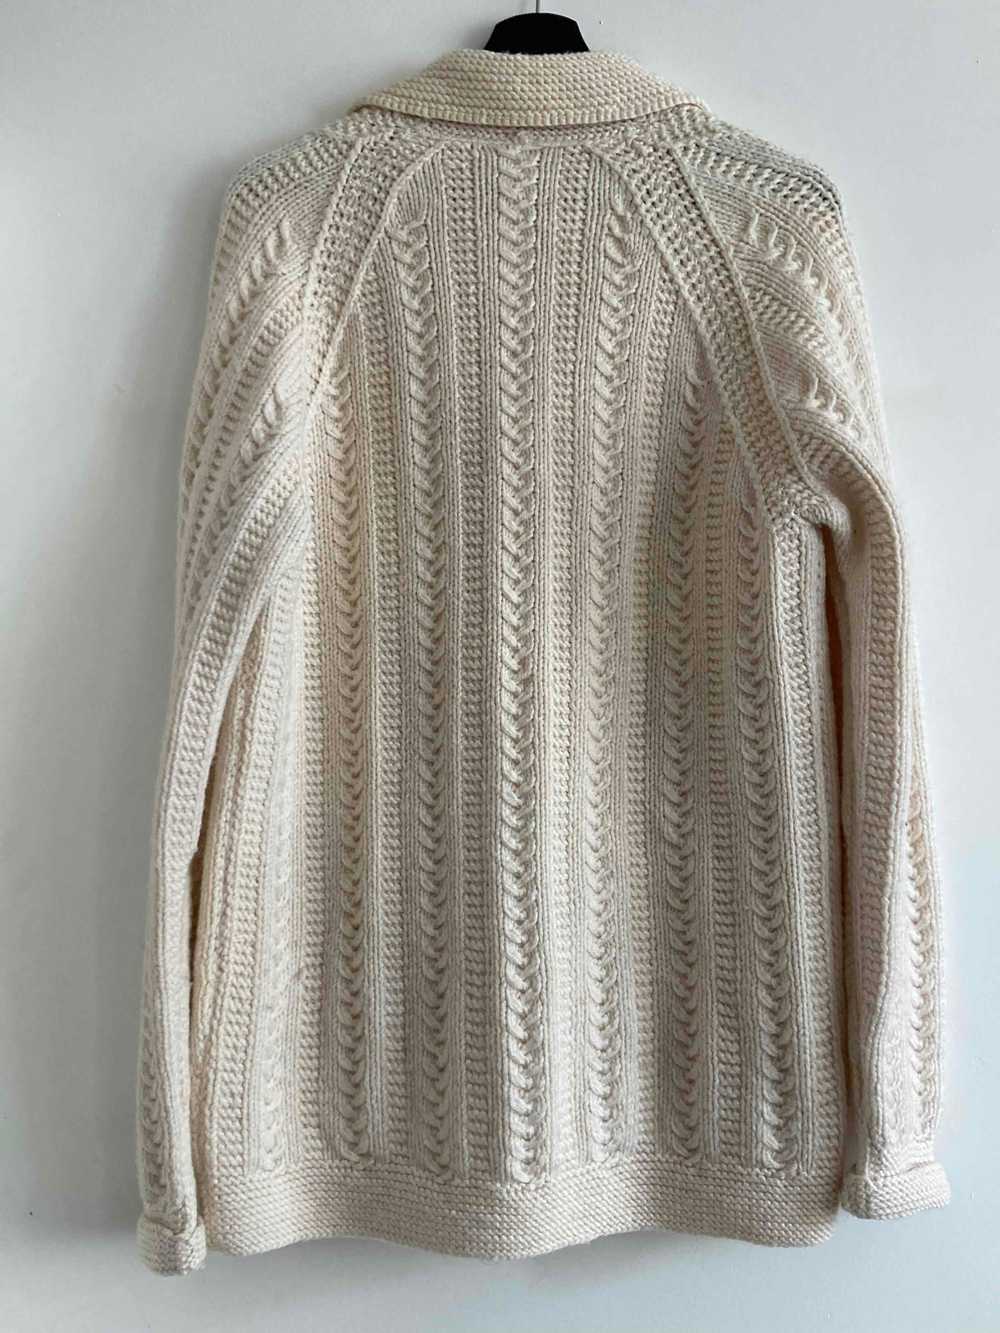 Wool jacket - Hand knitted wool jacket in Irish s… - image 5